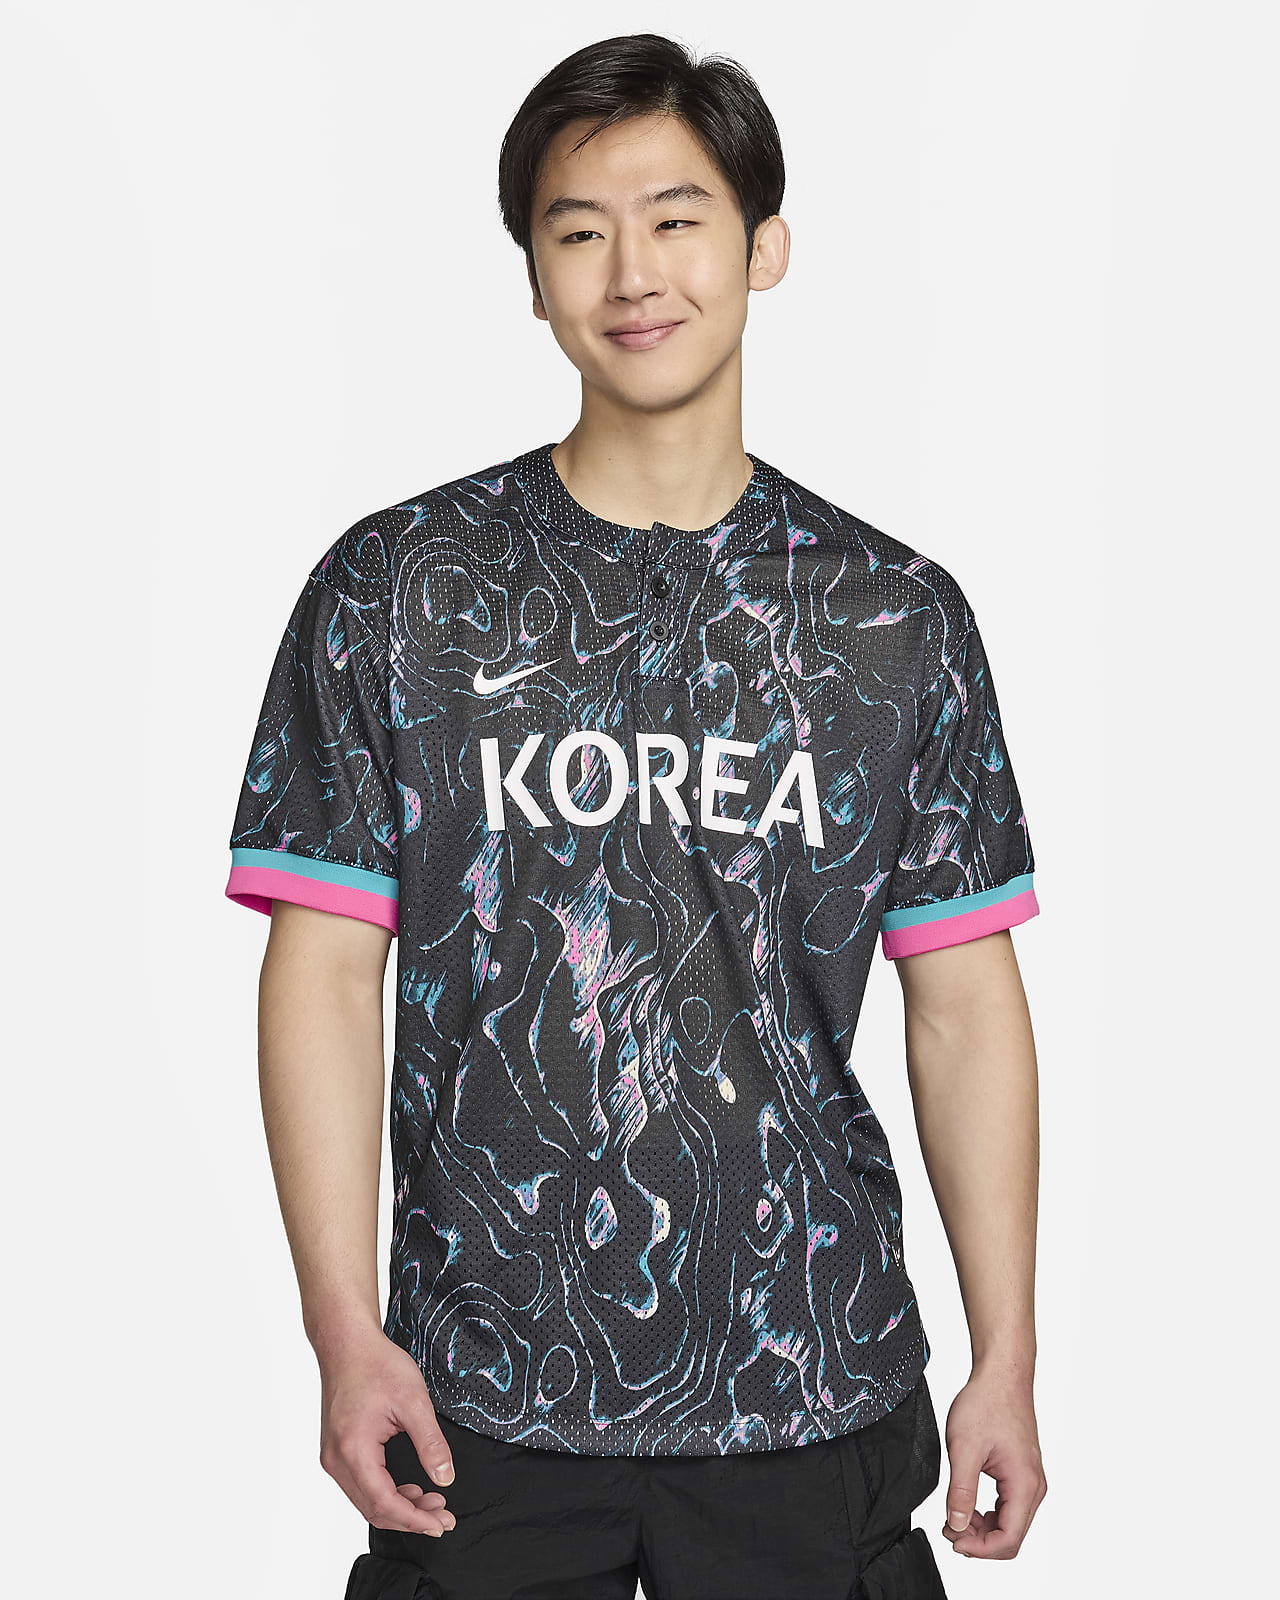 Korea Men's Nike Baseball Jersey